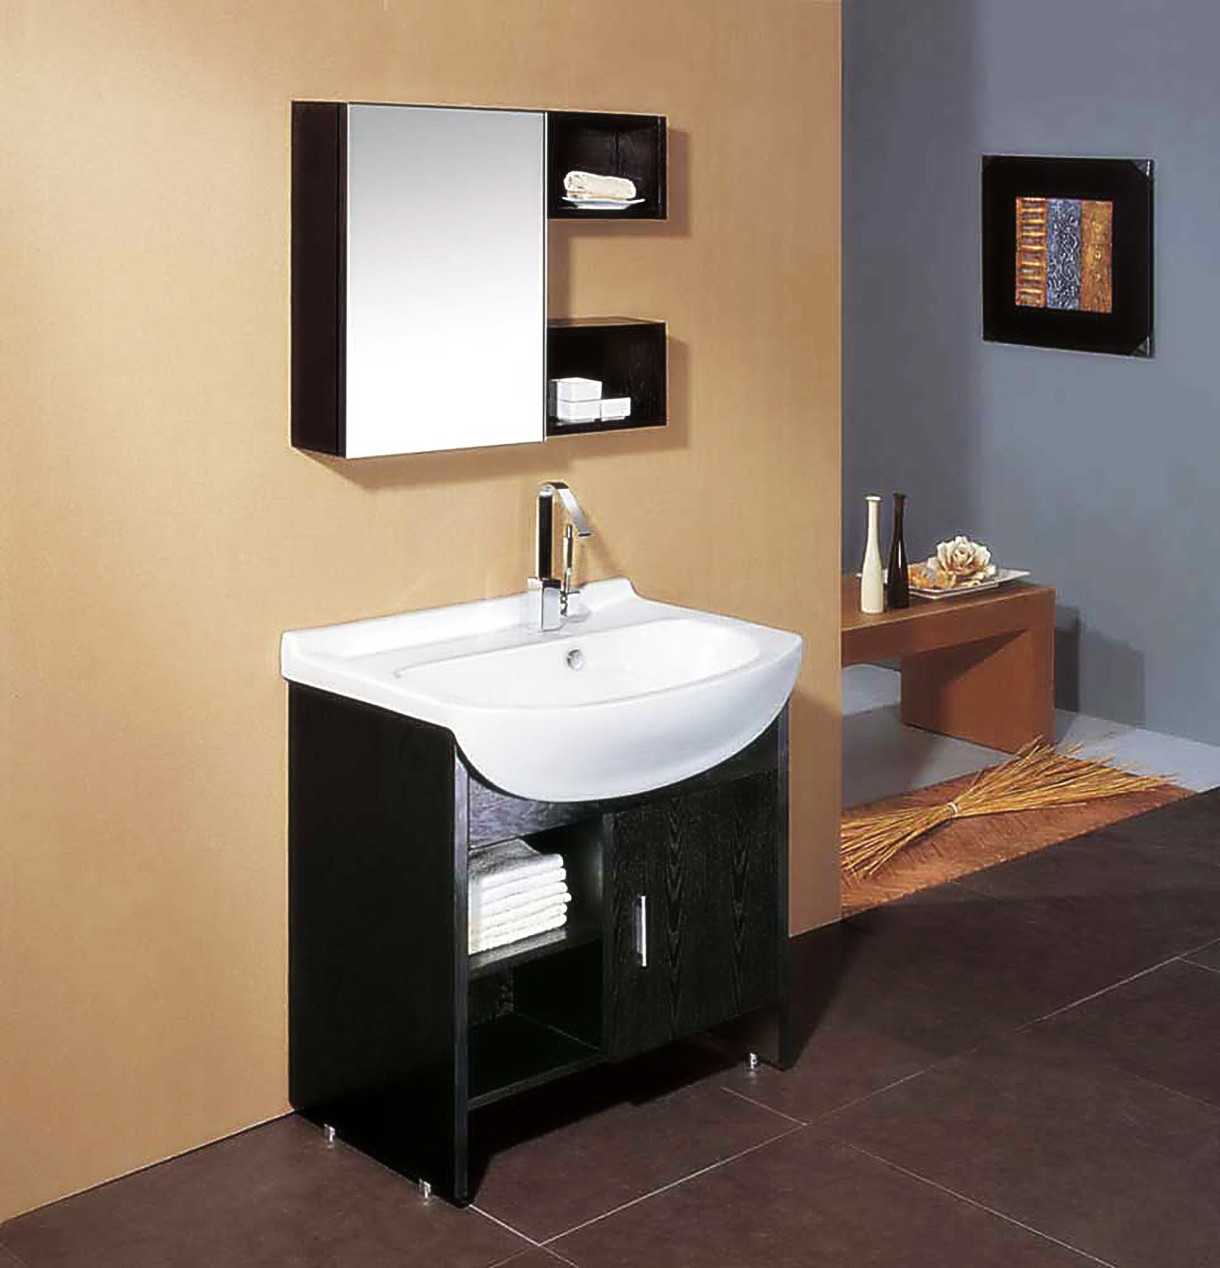 Ikea Bathroom Wall Cabinet
 Ikea Bath Cabinet Invades Every Bathroom with Dignity